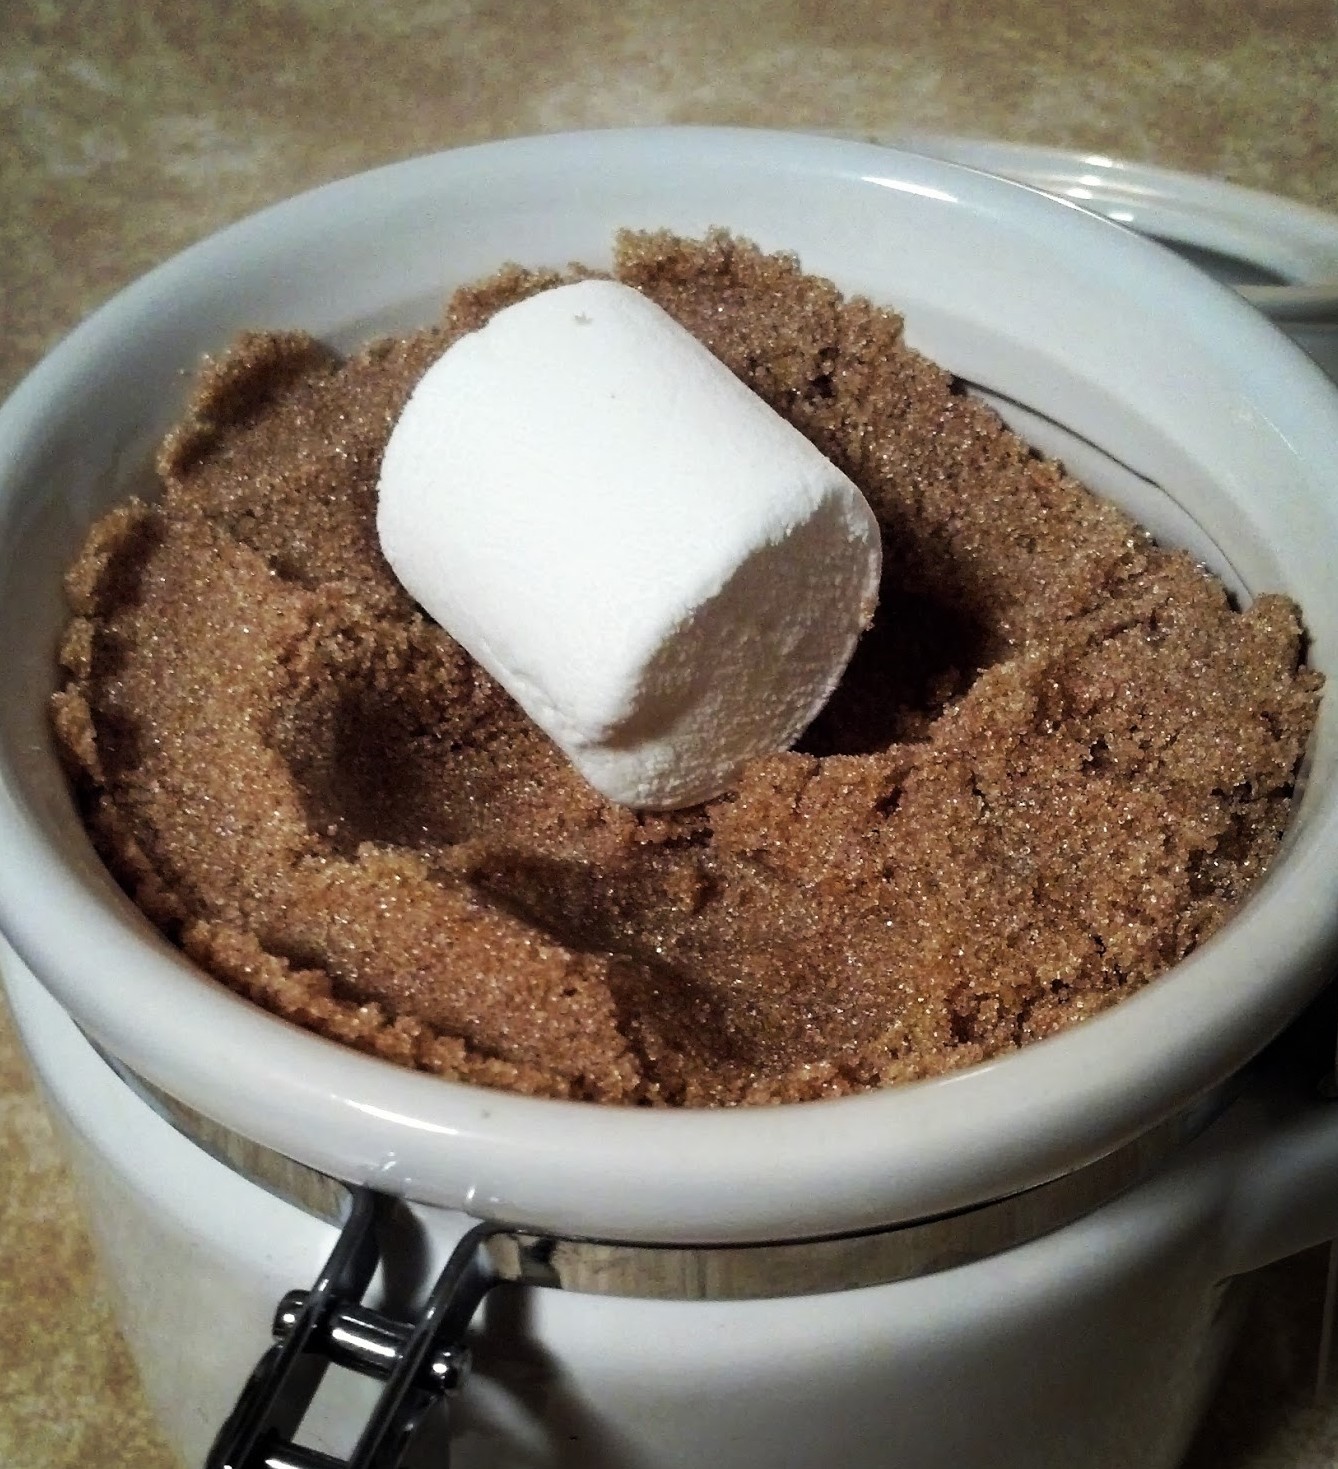 brown sugar - Ten Clever Kitchen Solutions